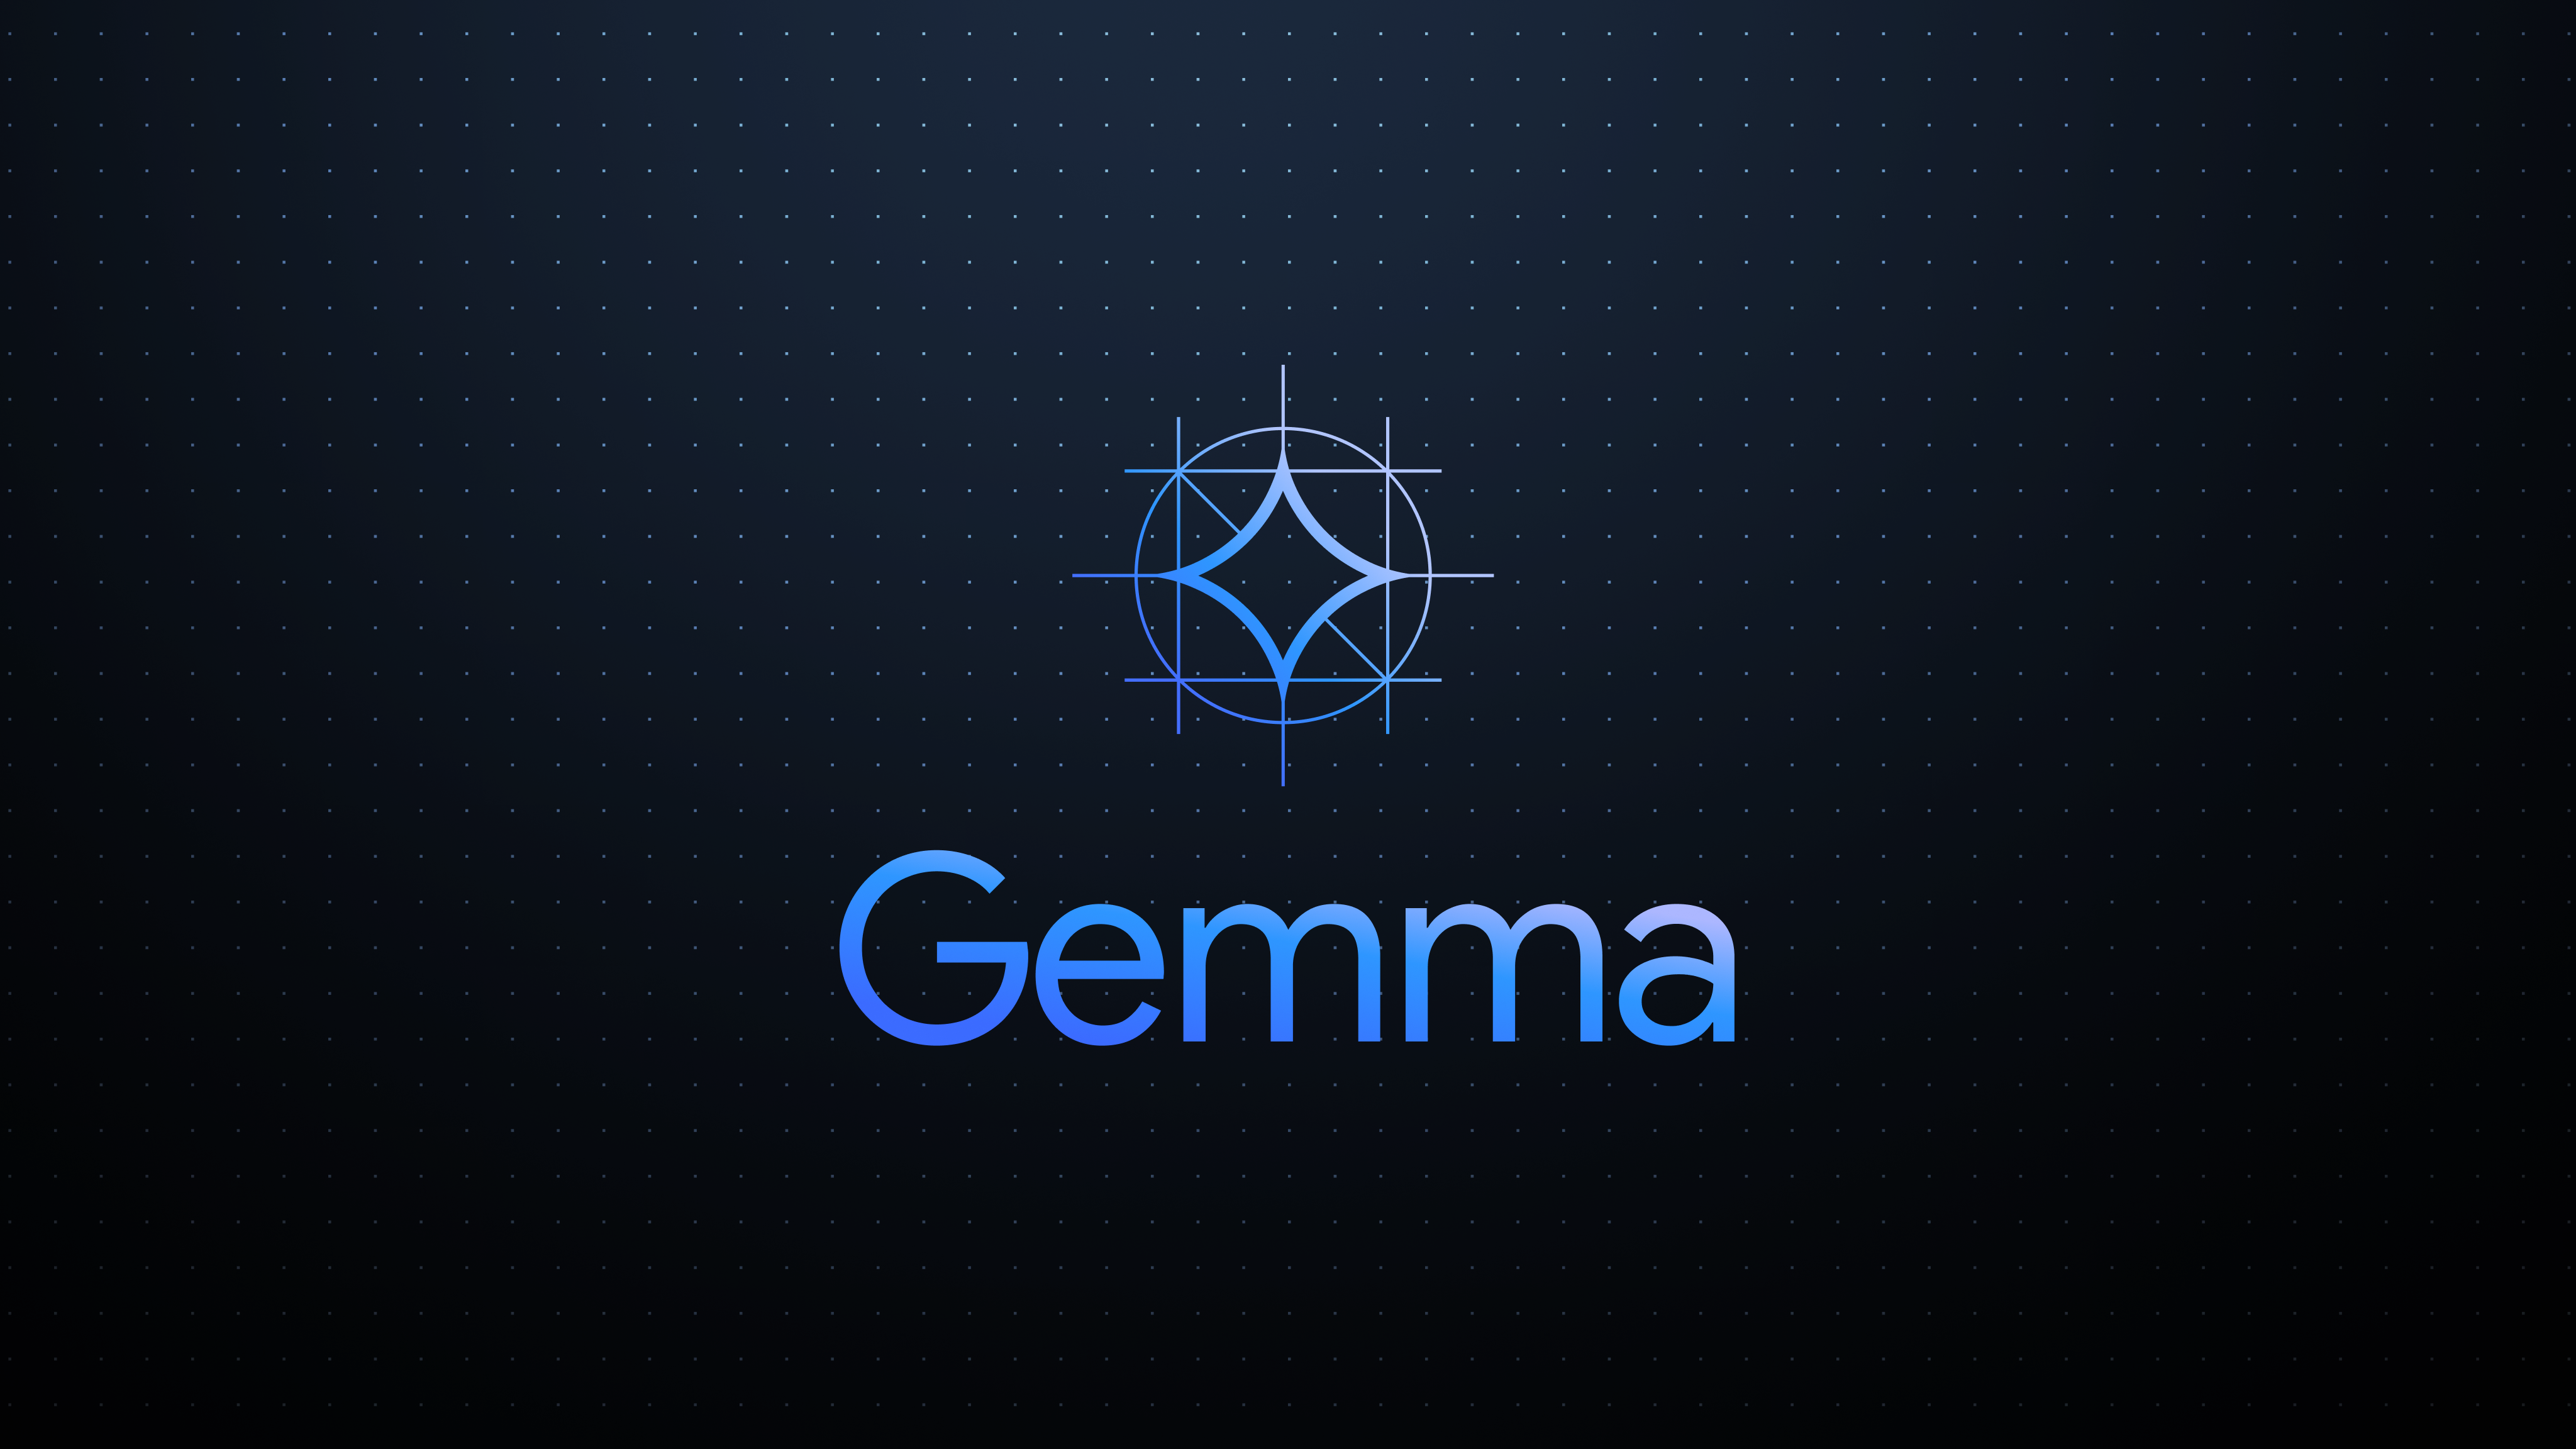 Gemma launch